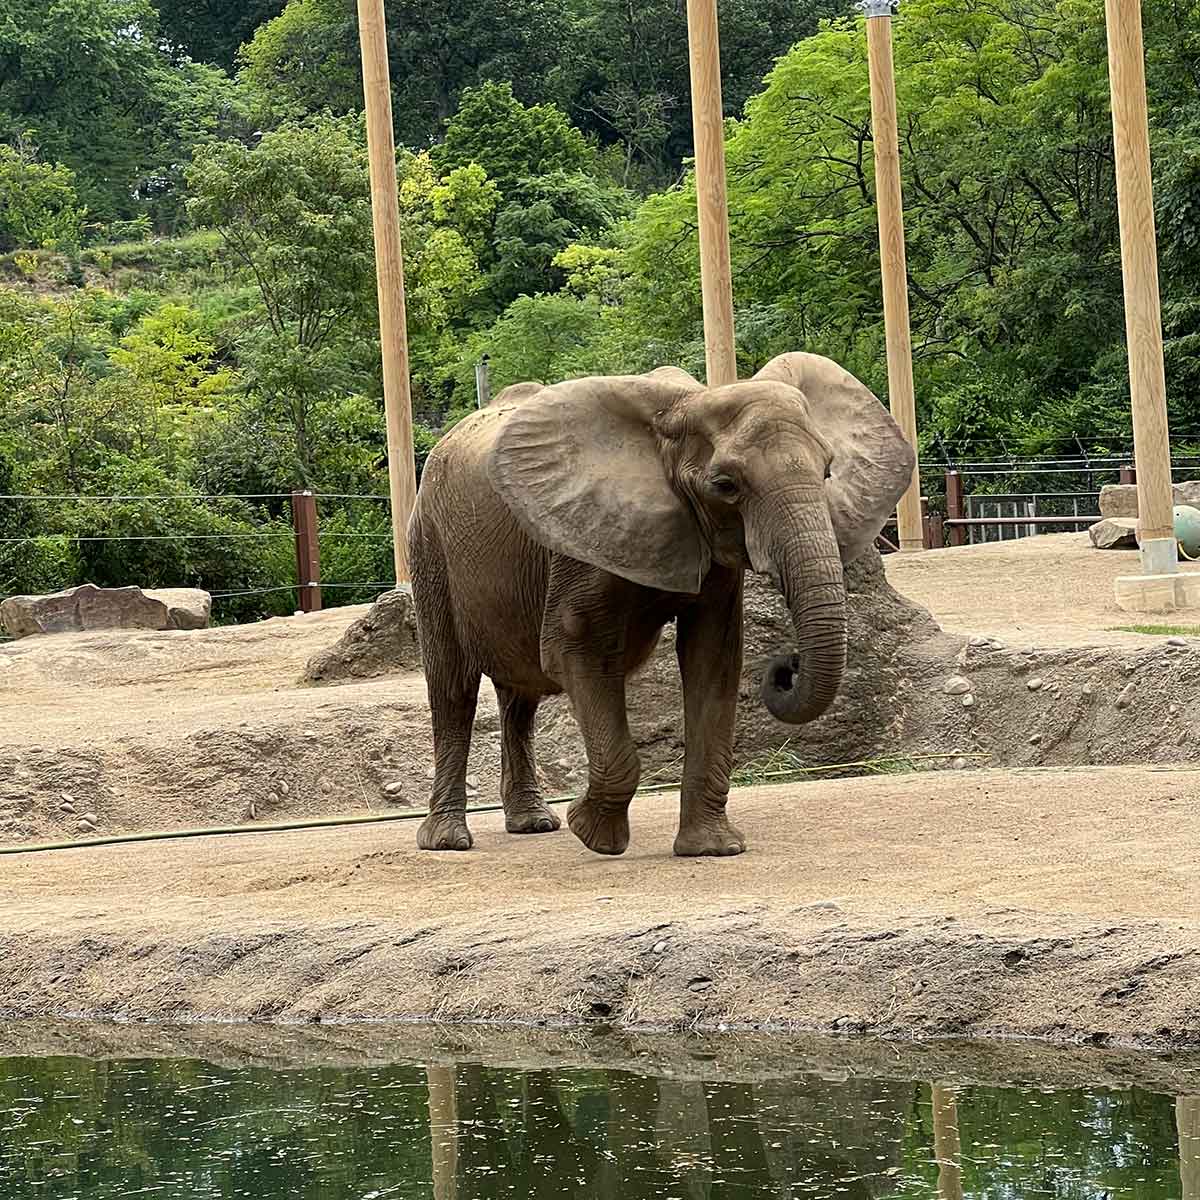 Elephant at the zoo.